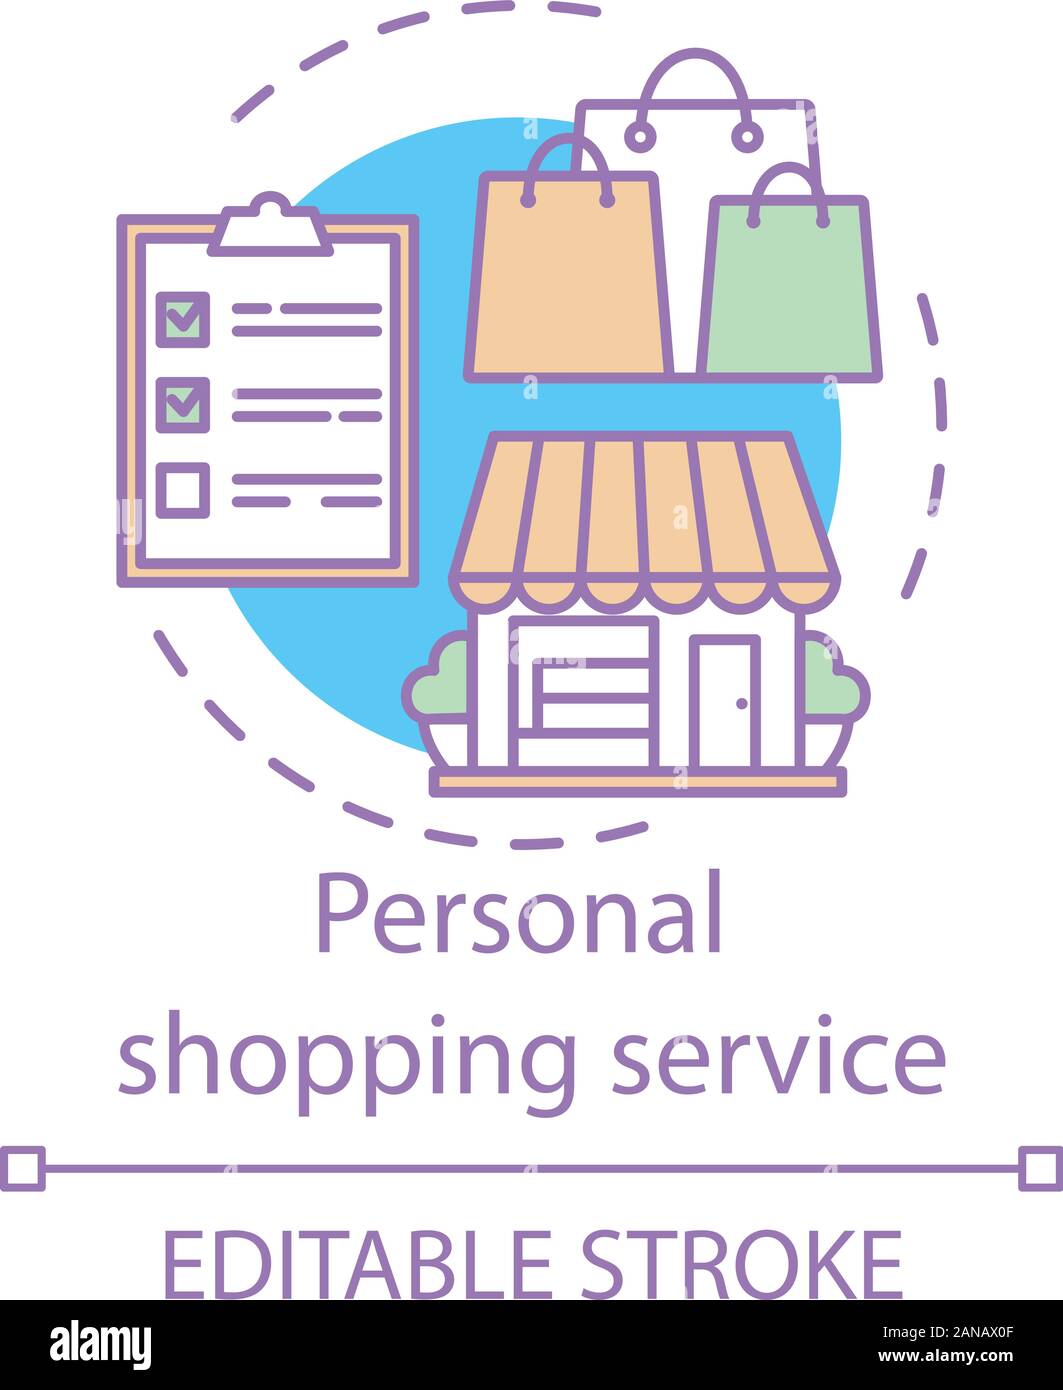 Personal shopping service concept icon home Vector Image